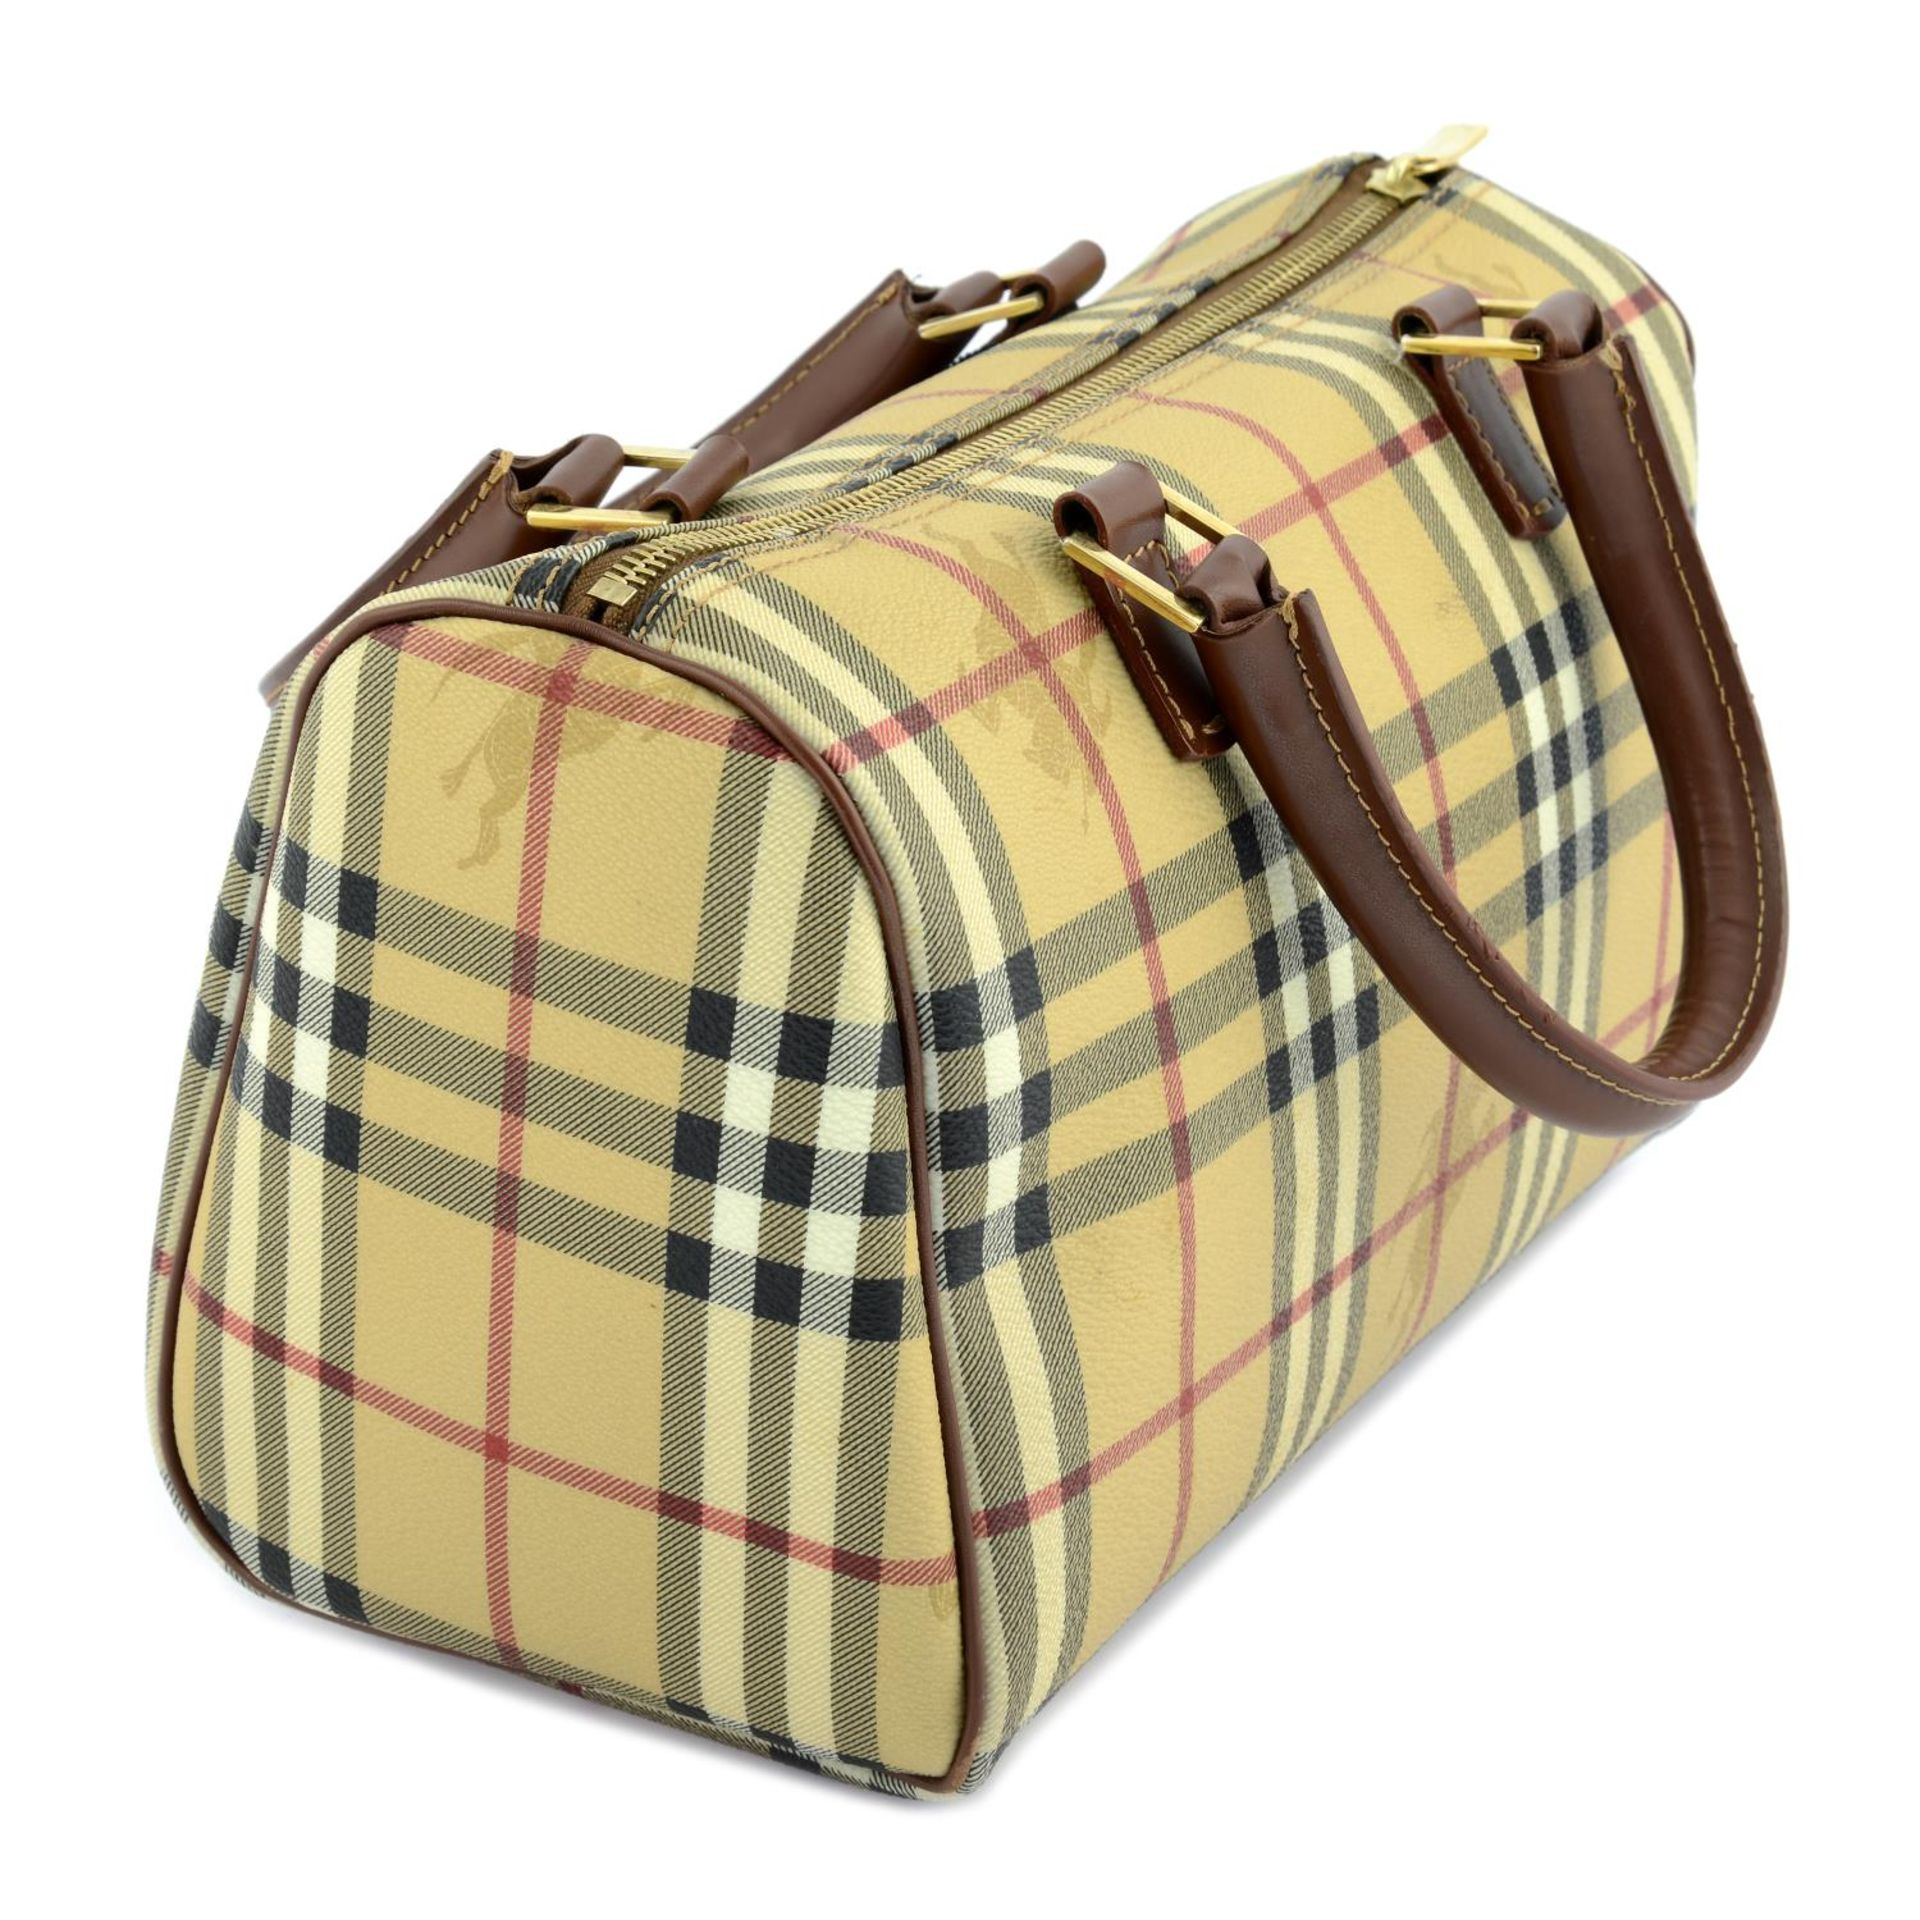 BURBERRY - a Haymarket Check Boston handbag. - Image 3 of 7